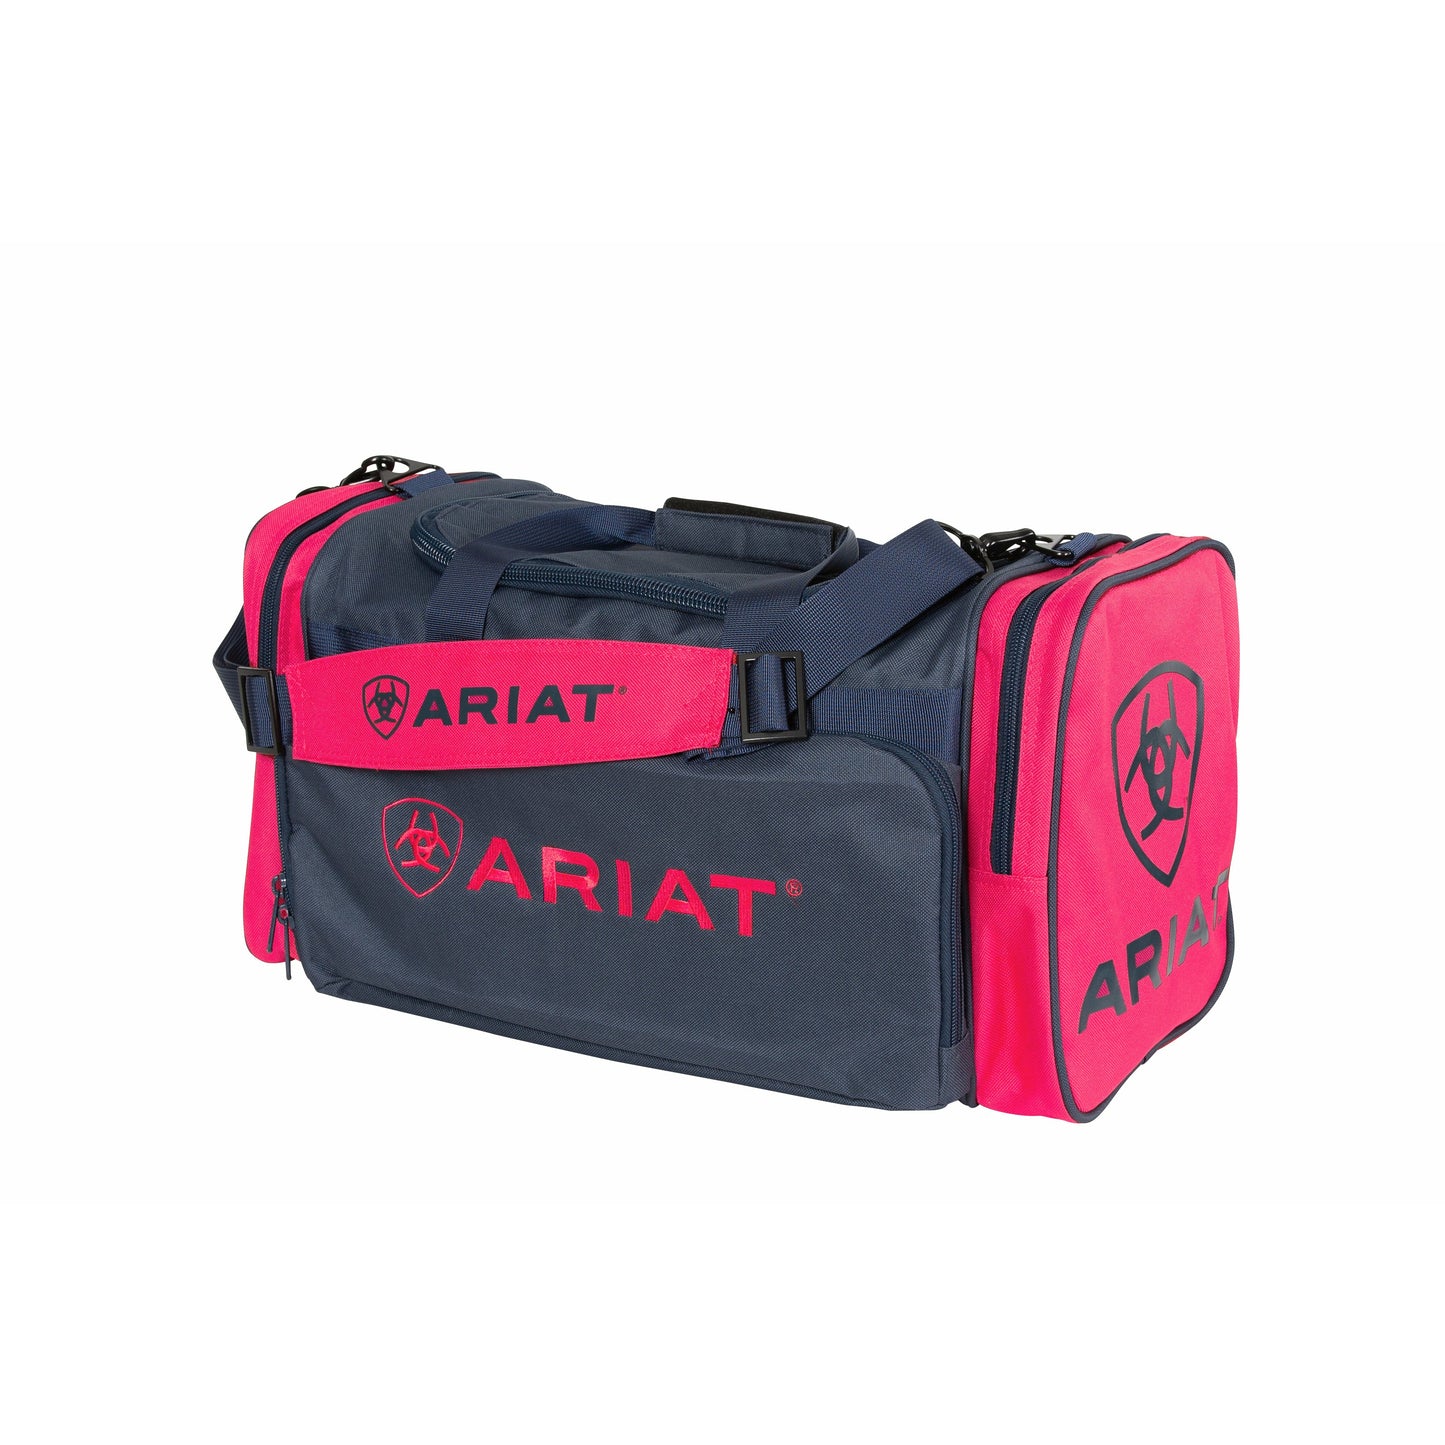 Ariat Junior Gear Bag Pink/Navy